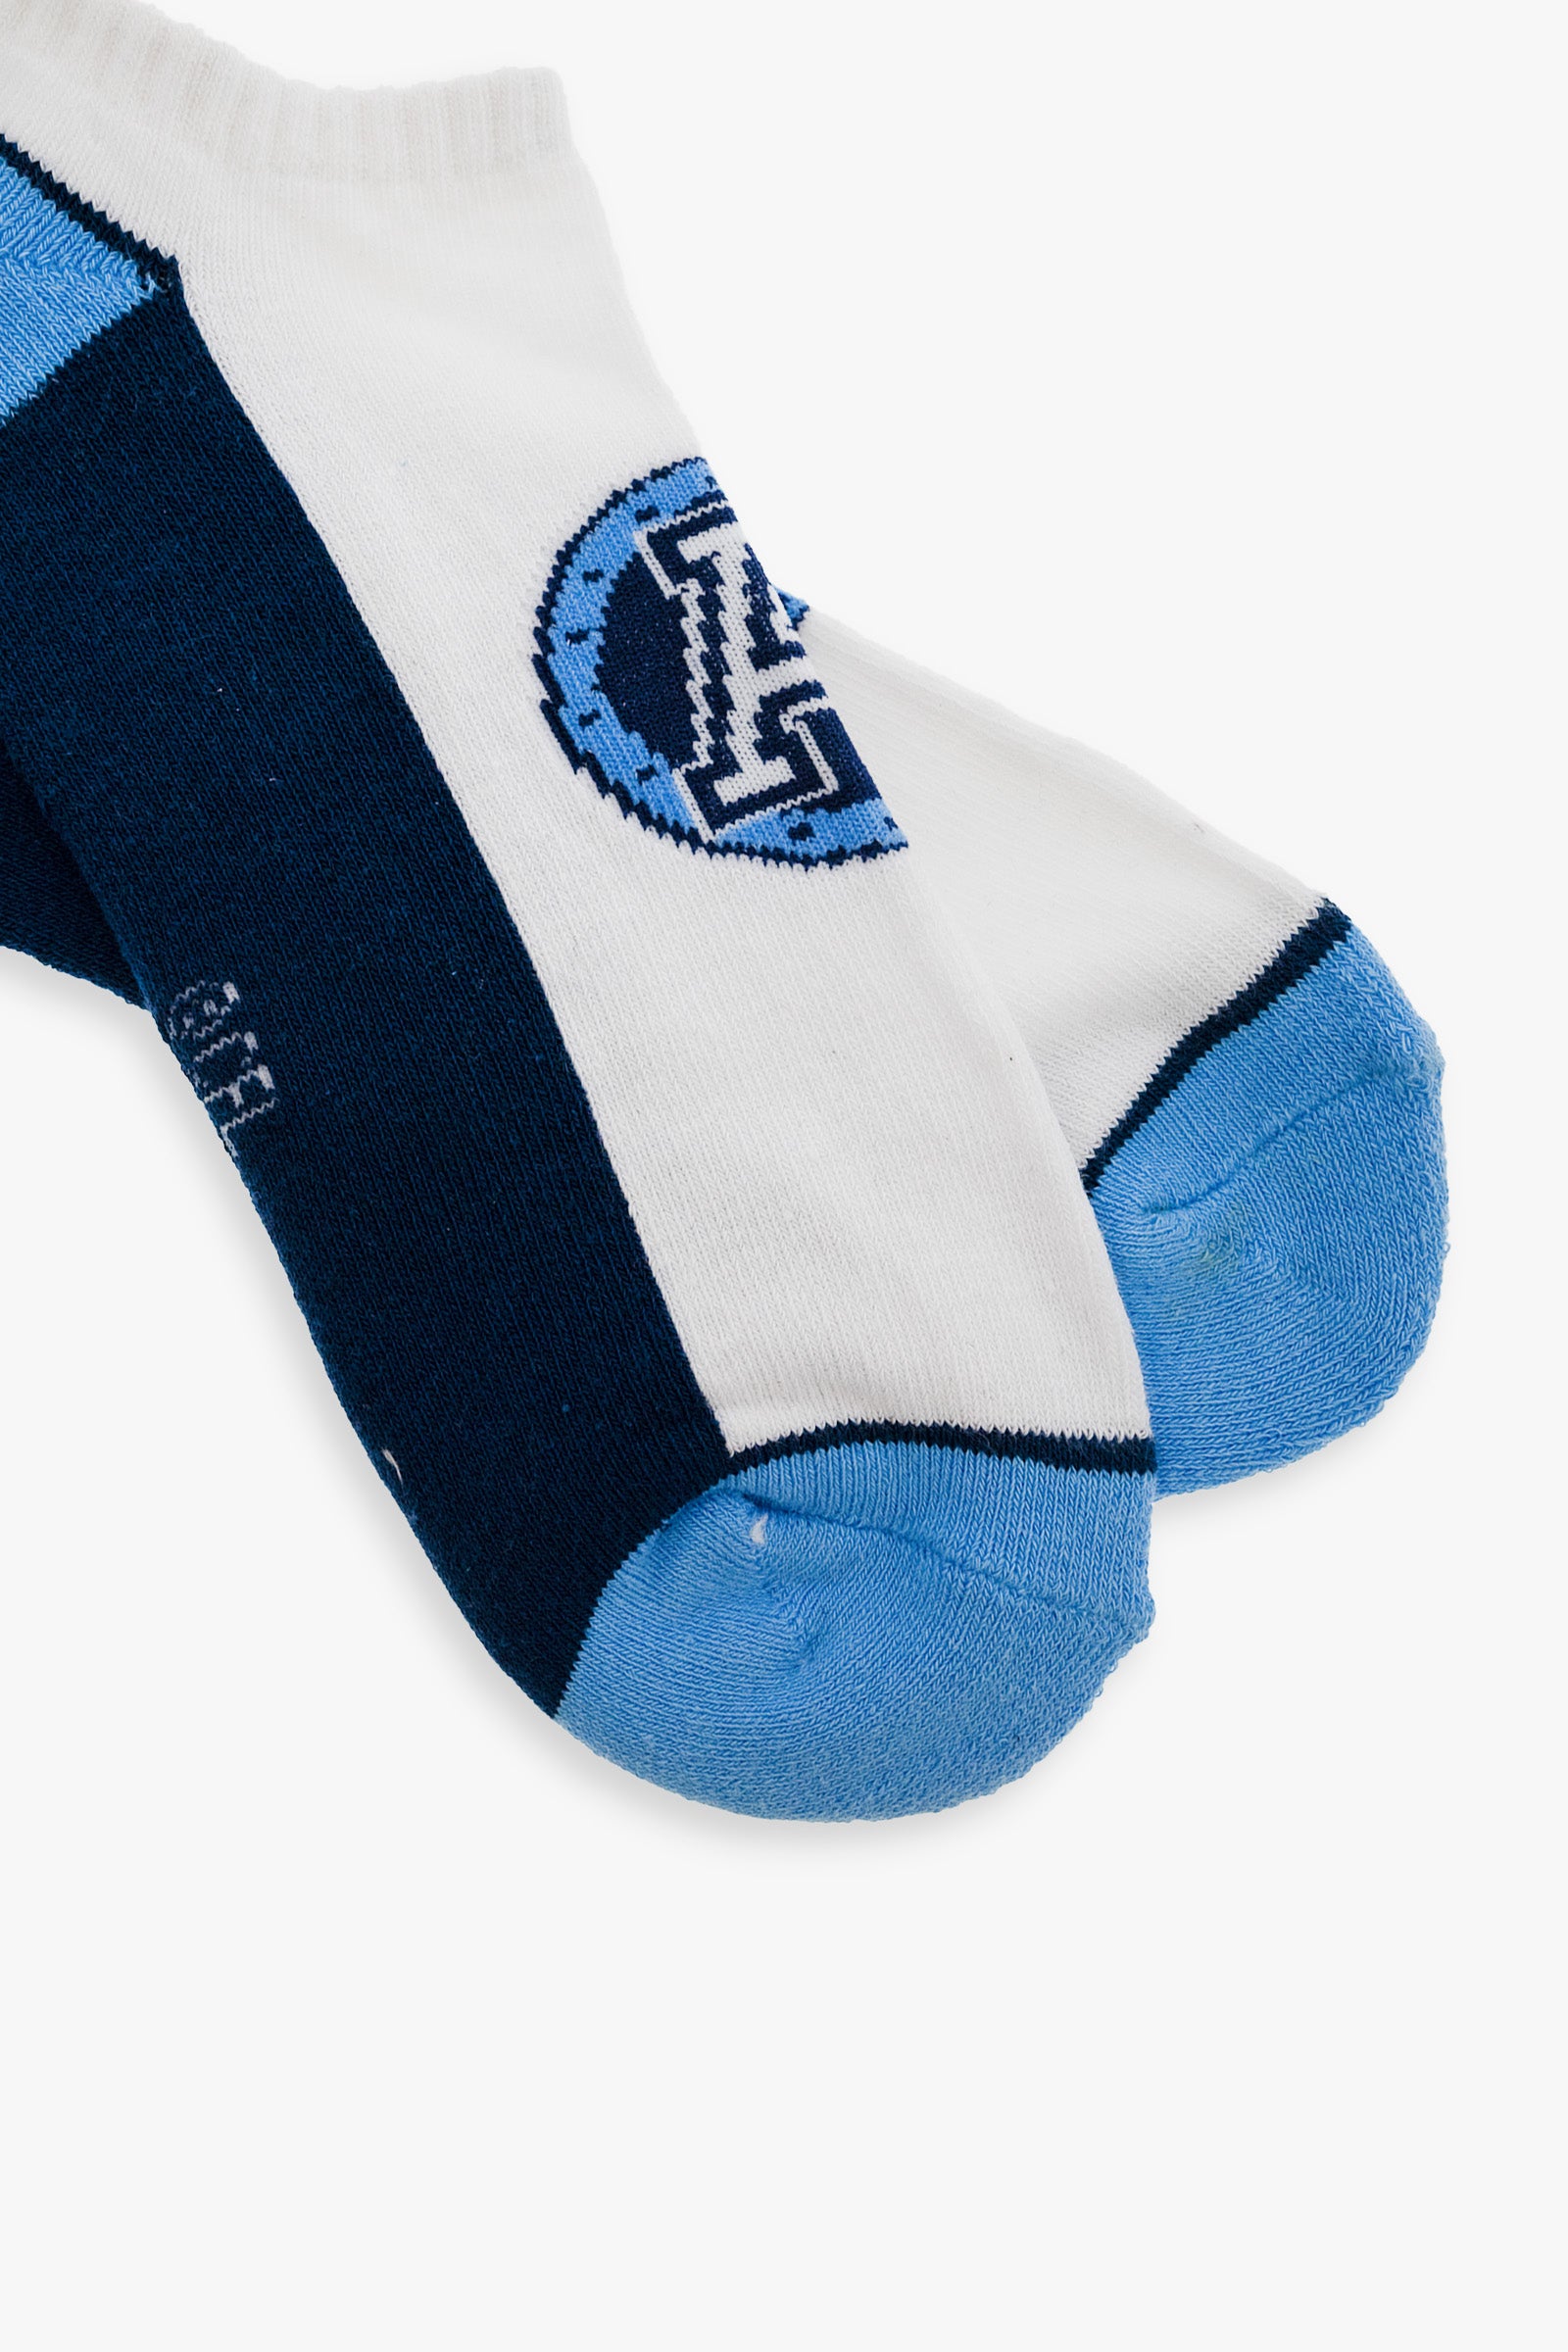 CFL Toronto Argonauts Men's 3-Pack No Show Ankle Socks